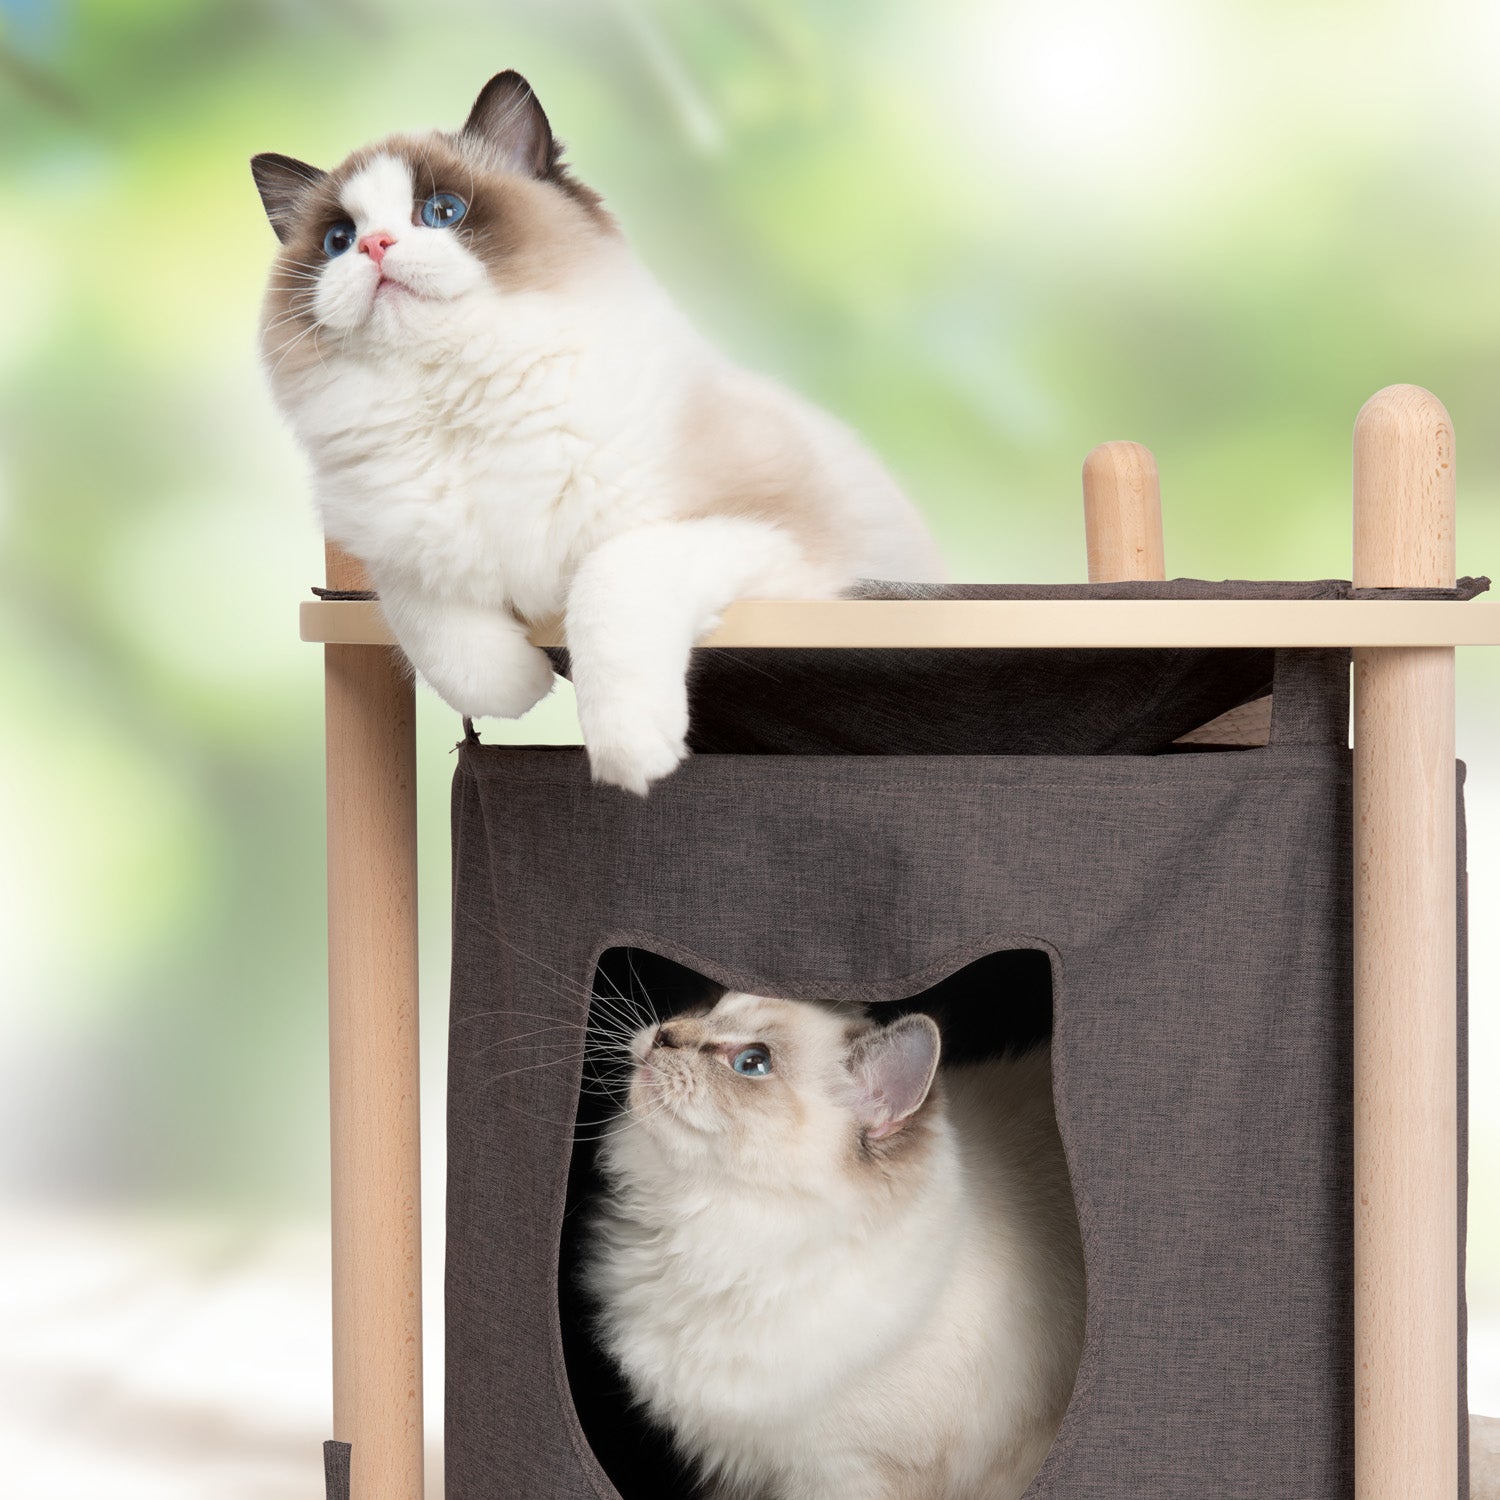 Catit Cat Furniture Vesper Treehouse 3 Levels Small